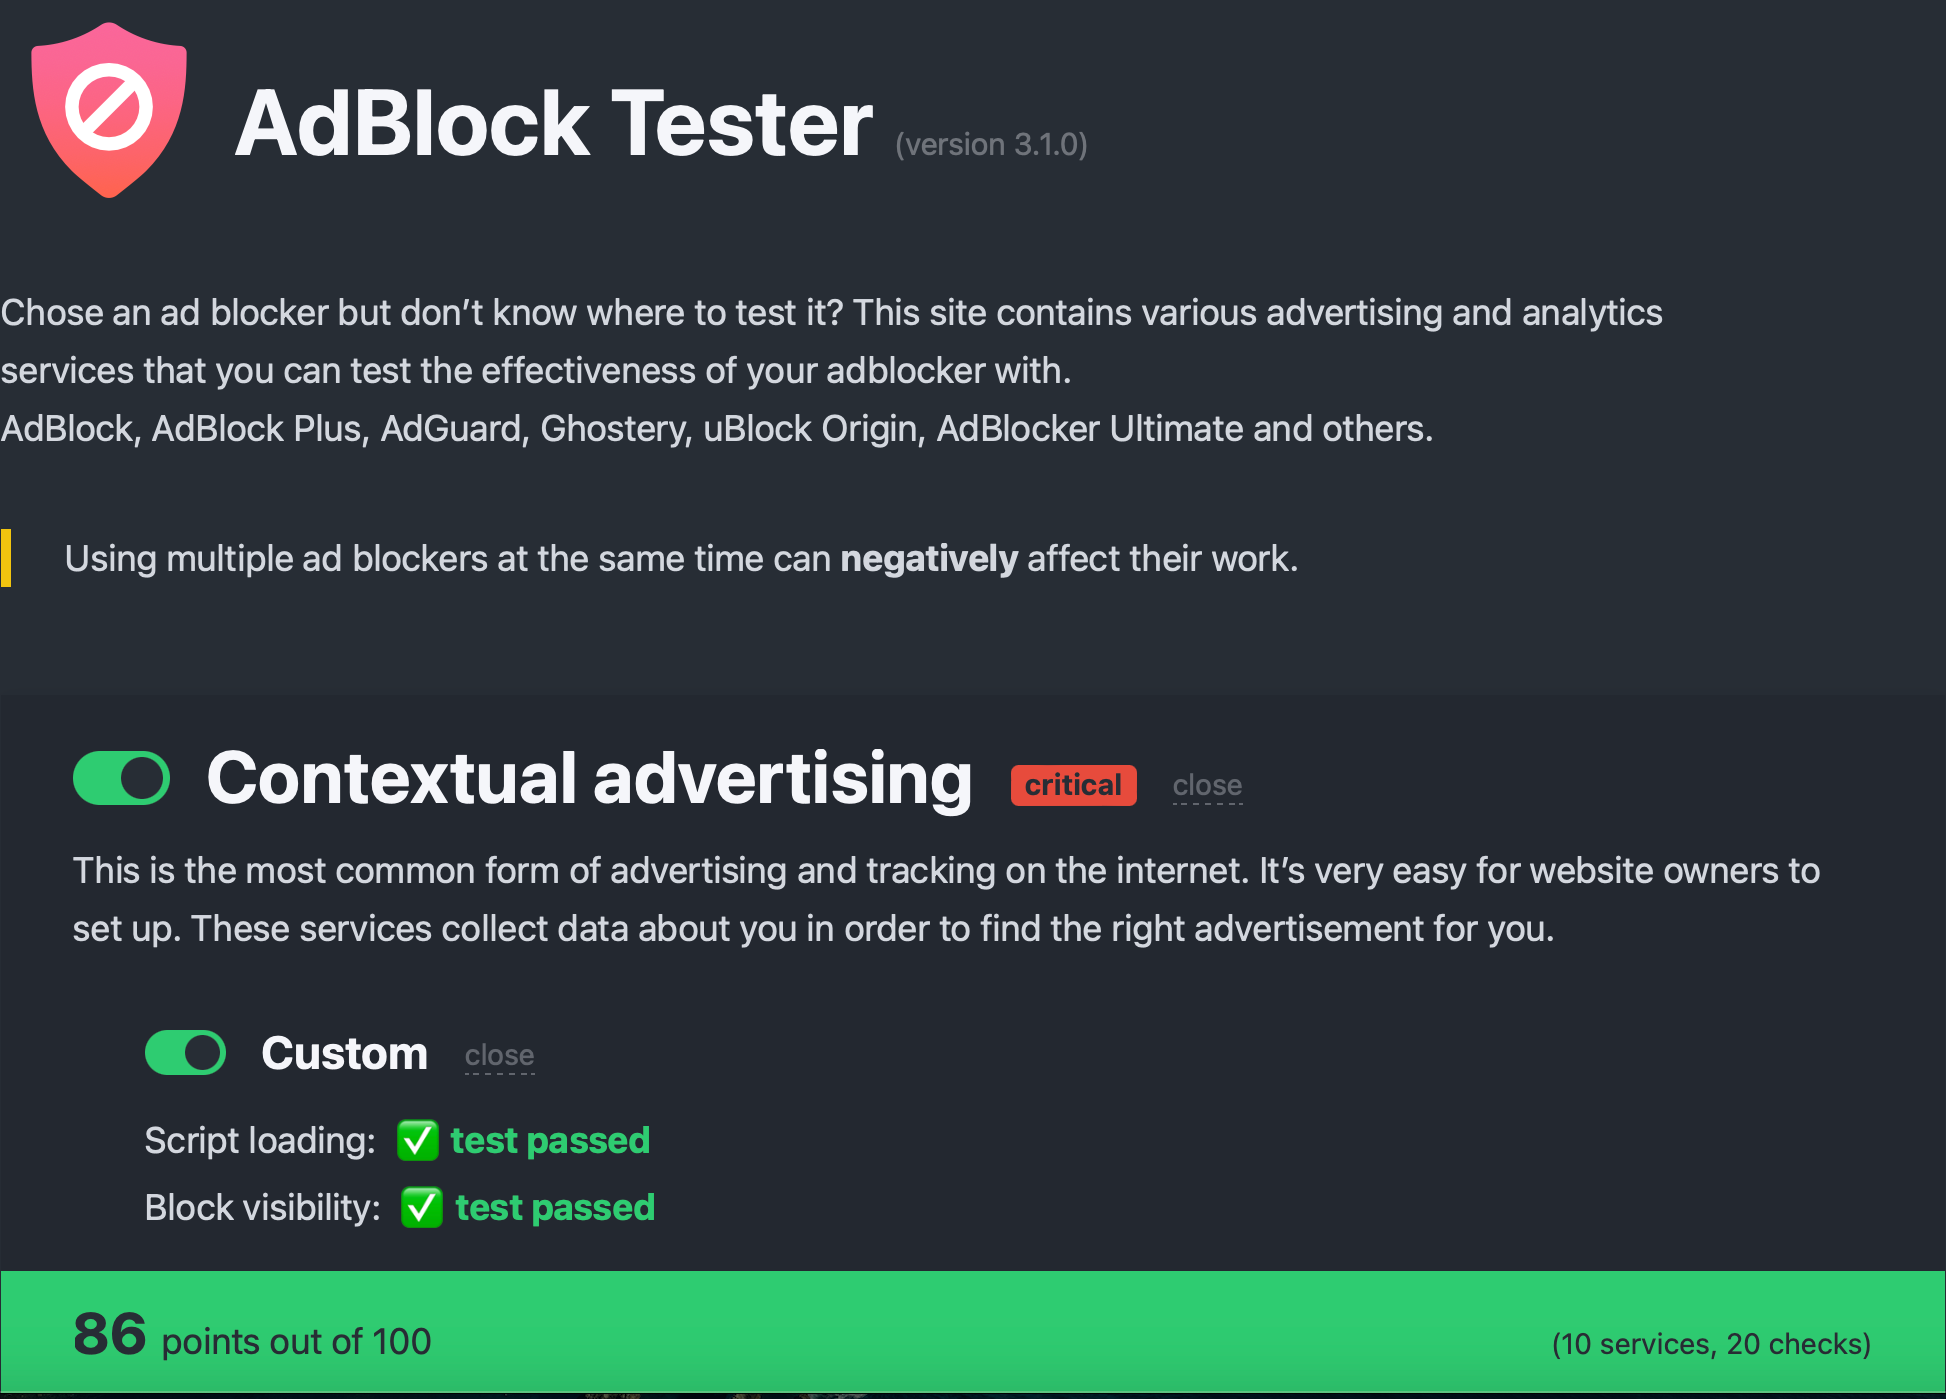 1Blocker free plan's AdBlocker Tester results to check for ad blocking.